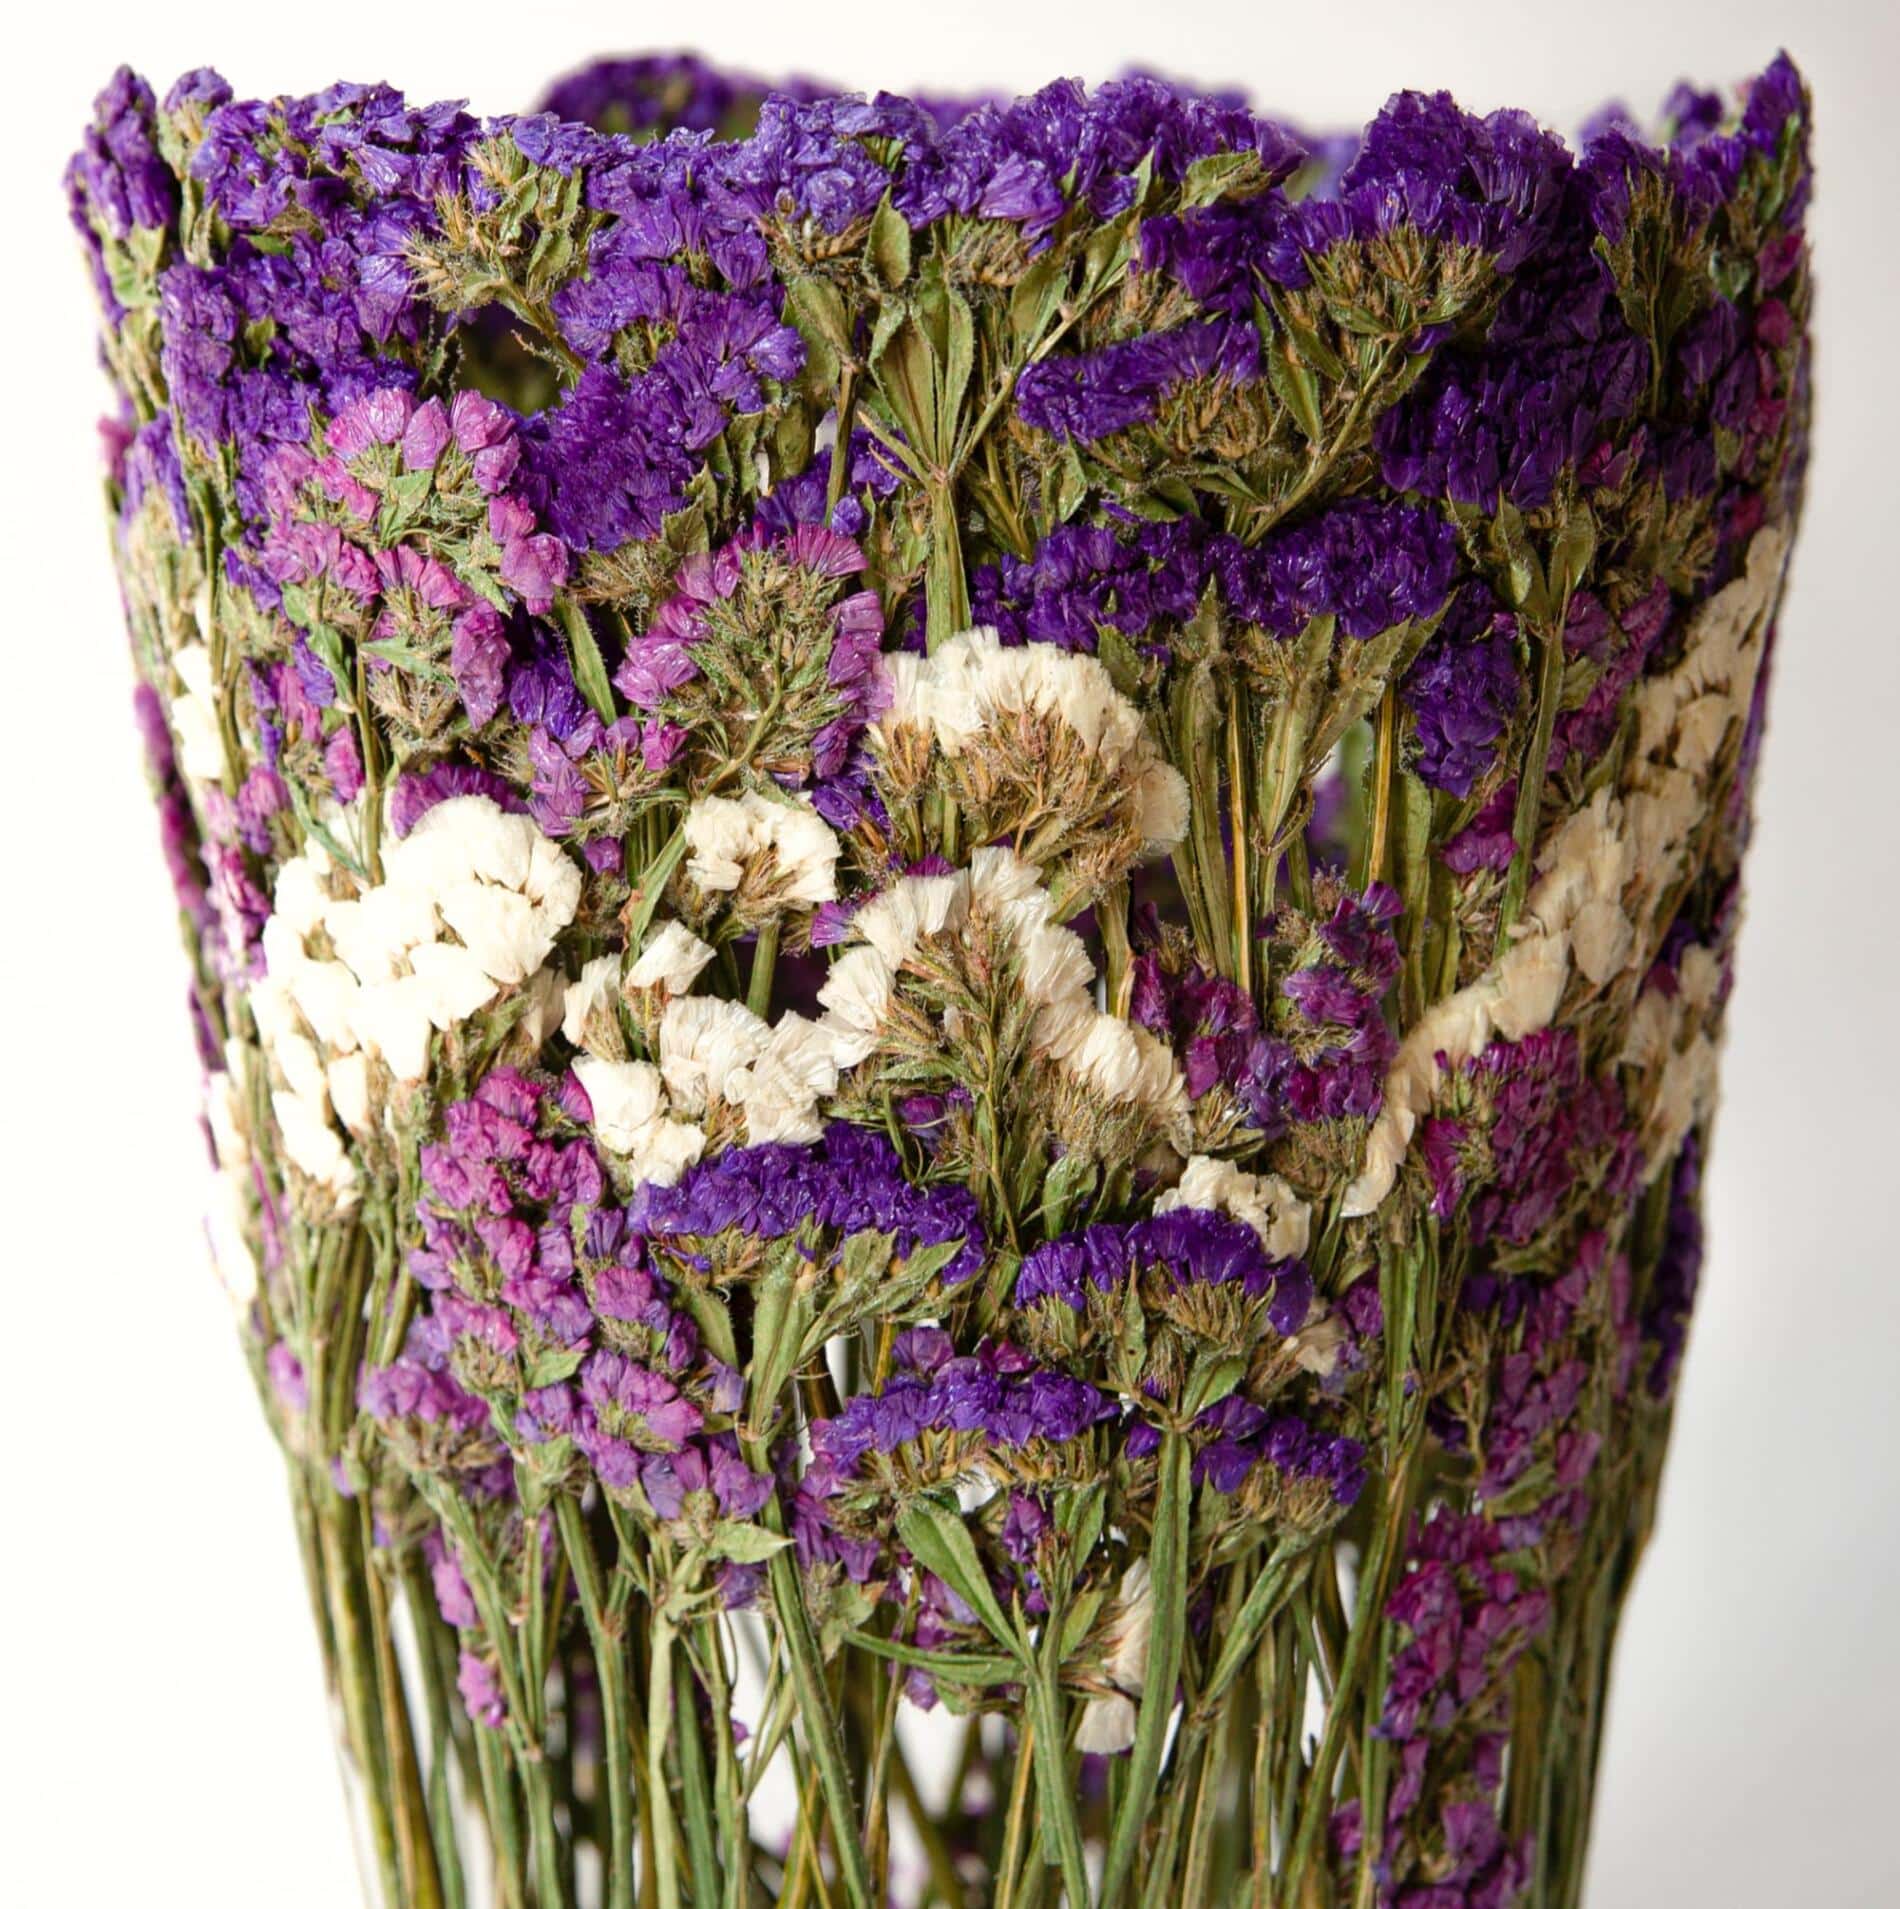 Shannon Clegg escultura biofilica flores secas y prensadas